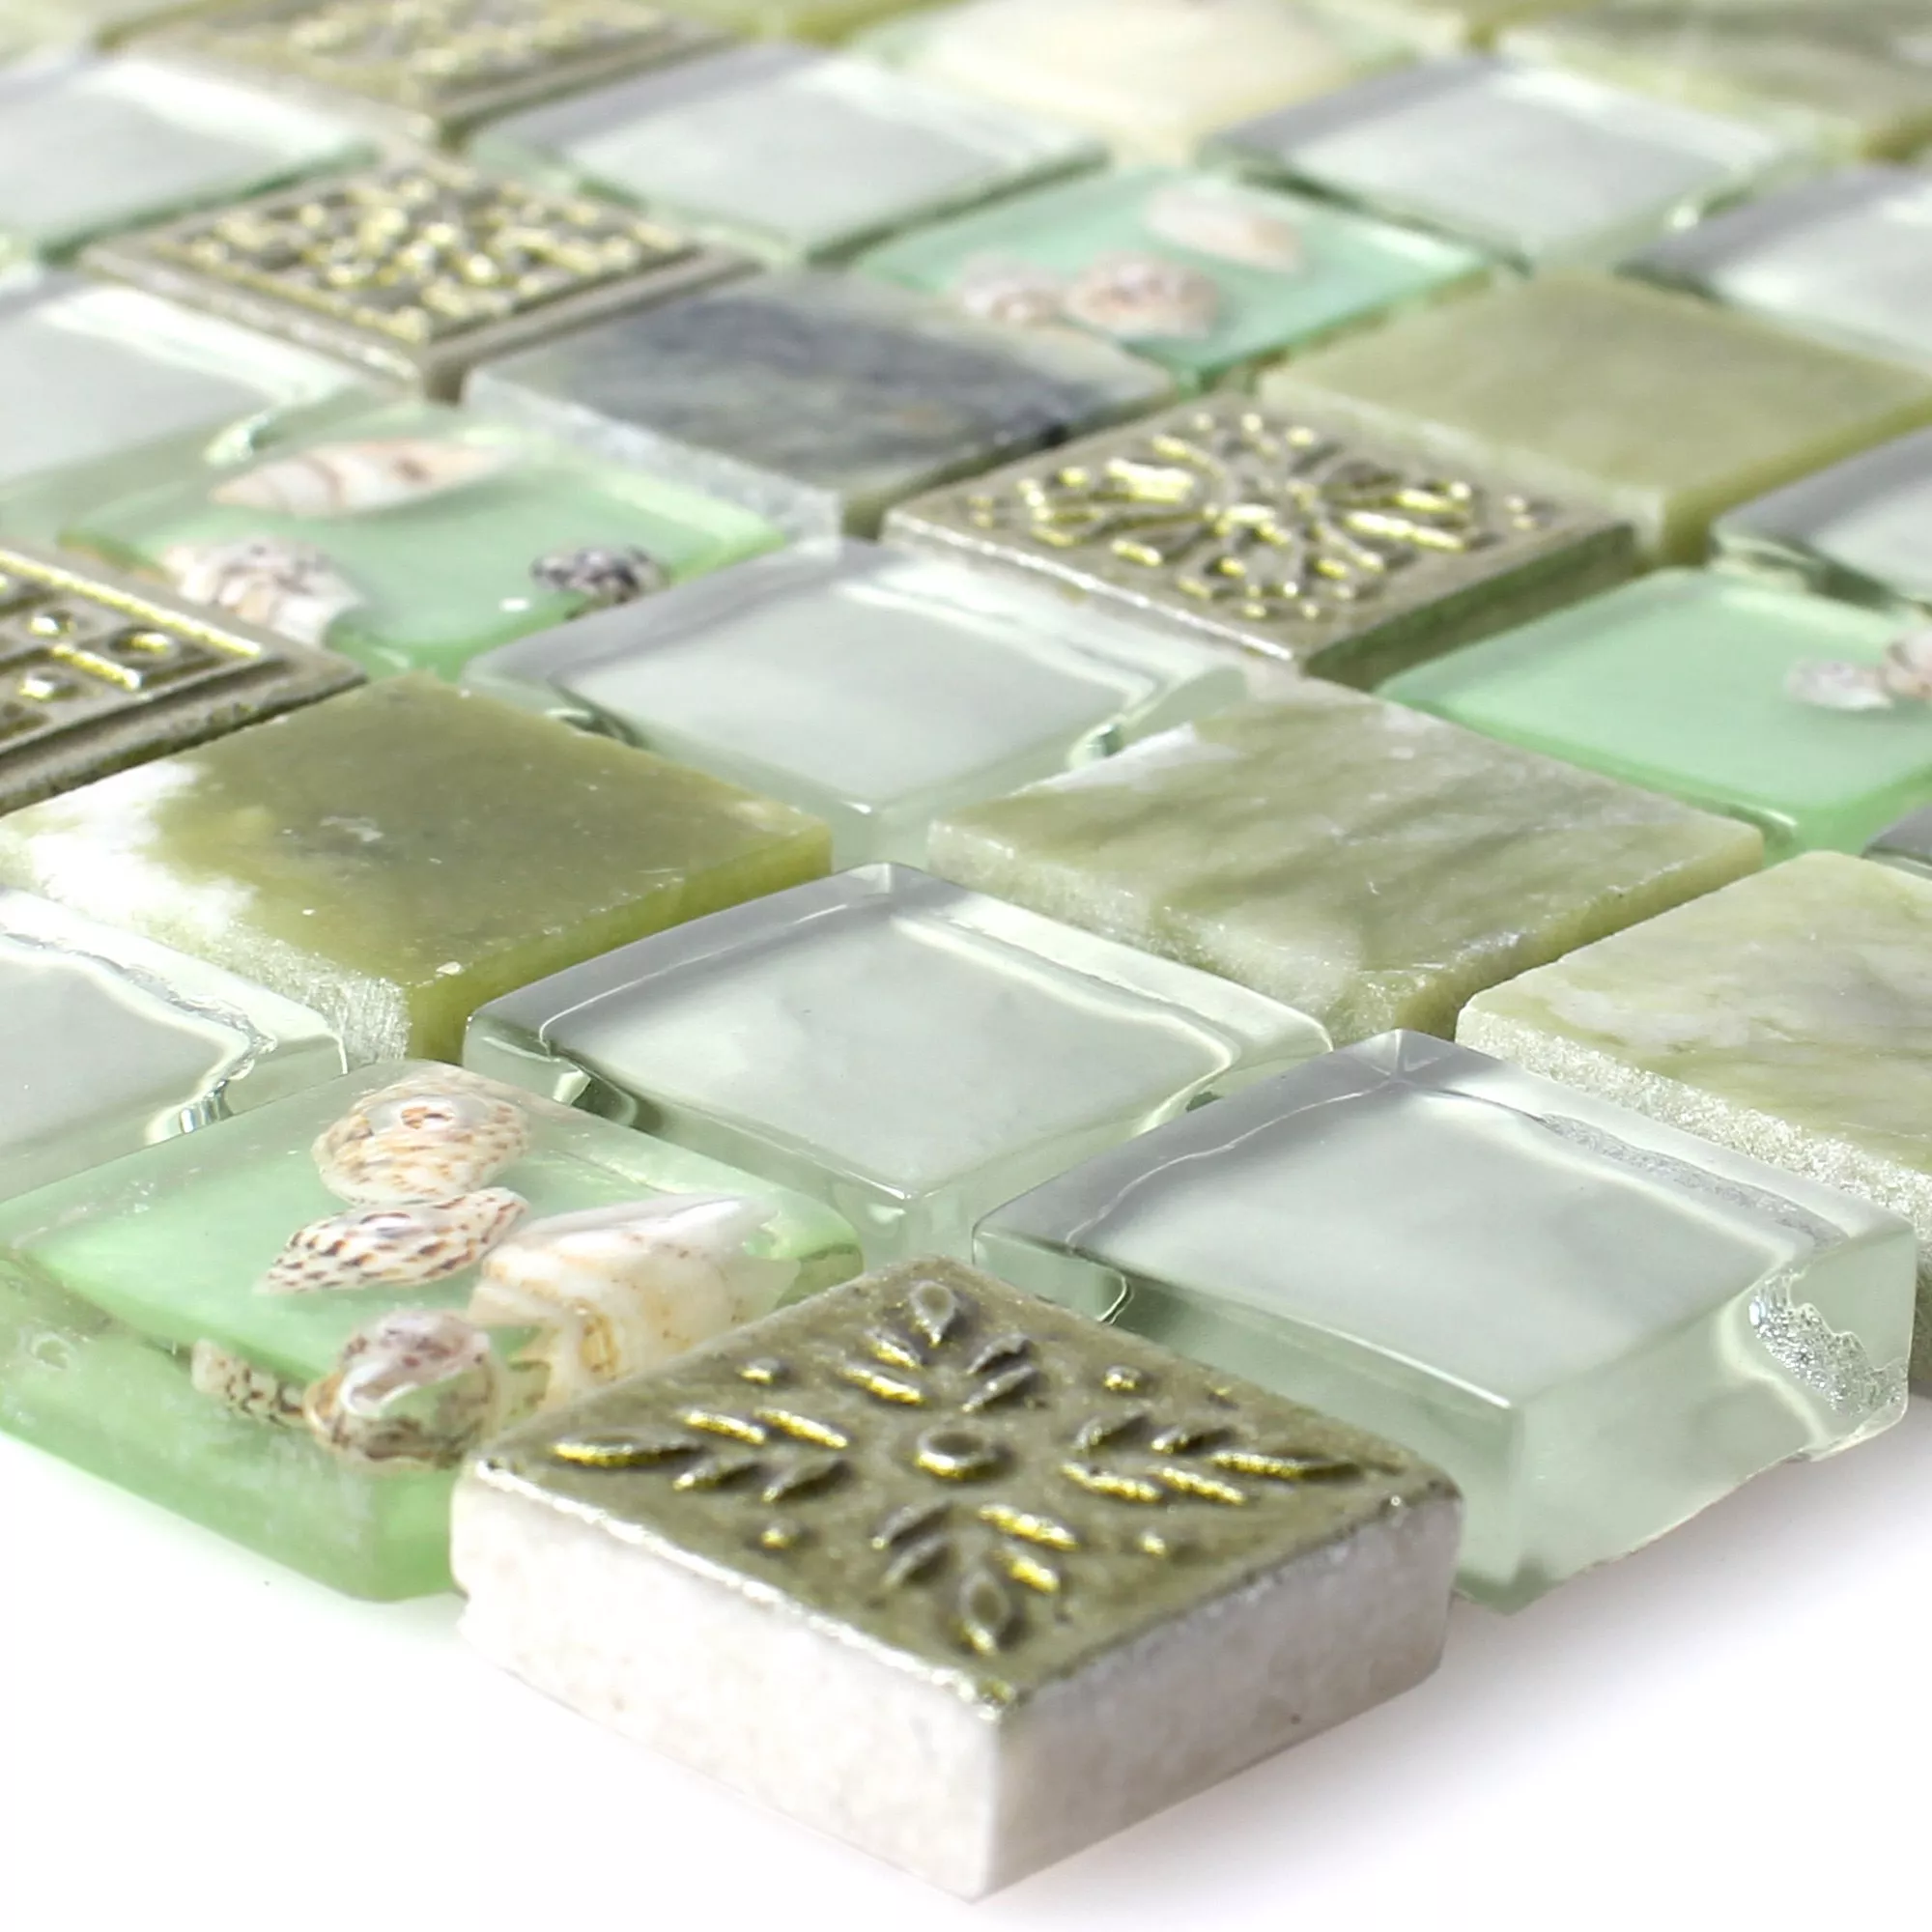 Glass Mosaic Natural Stone Tiles Tatvan Shell Green